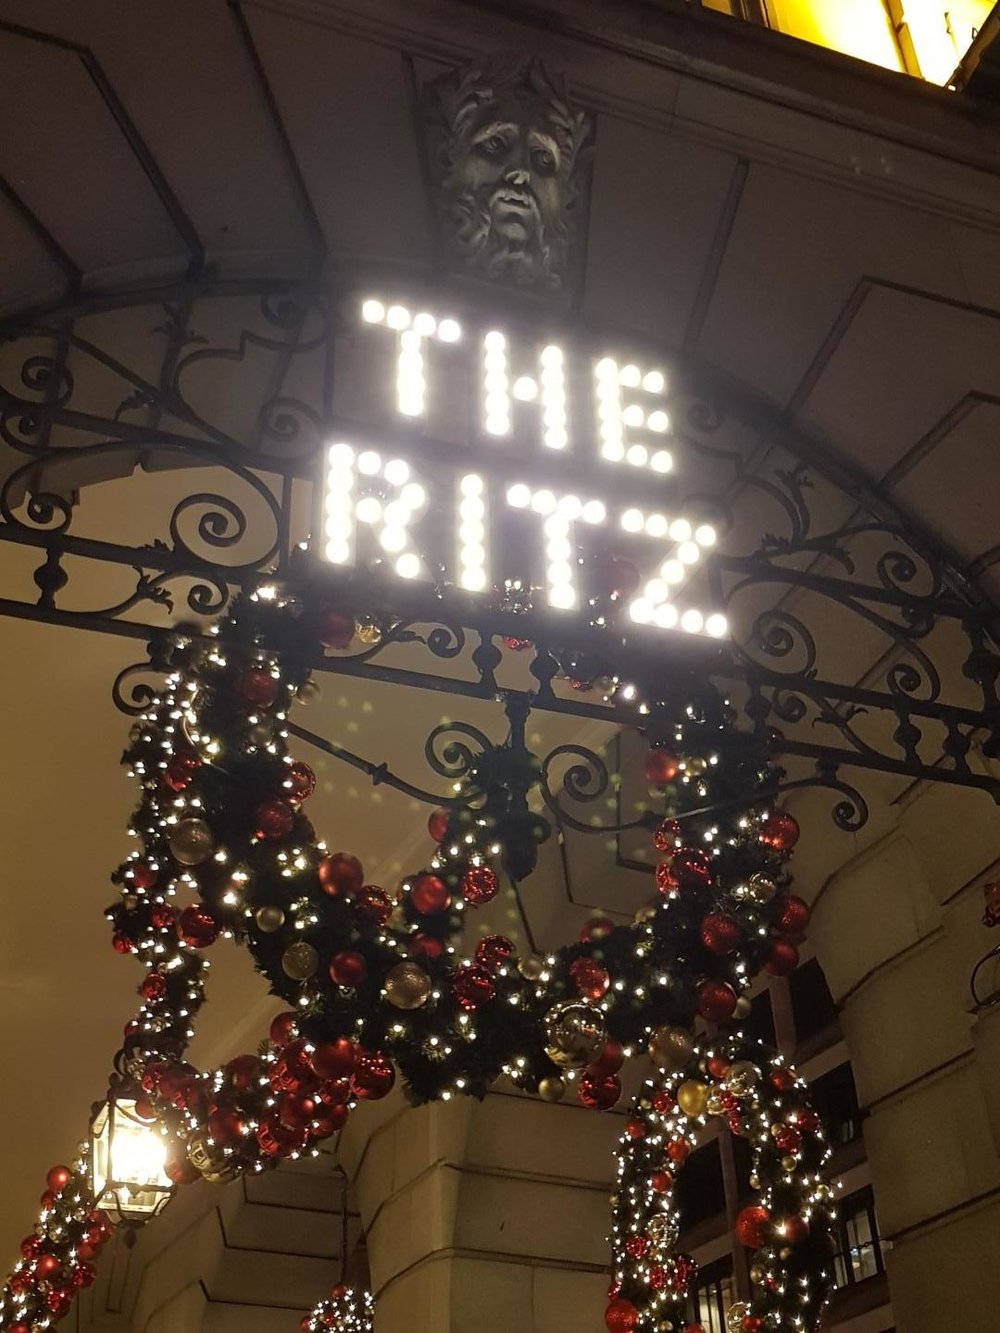 The Ritz in lights